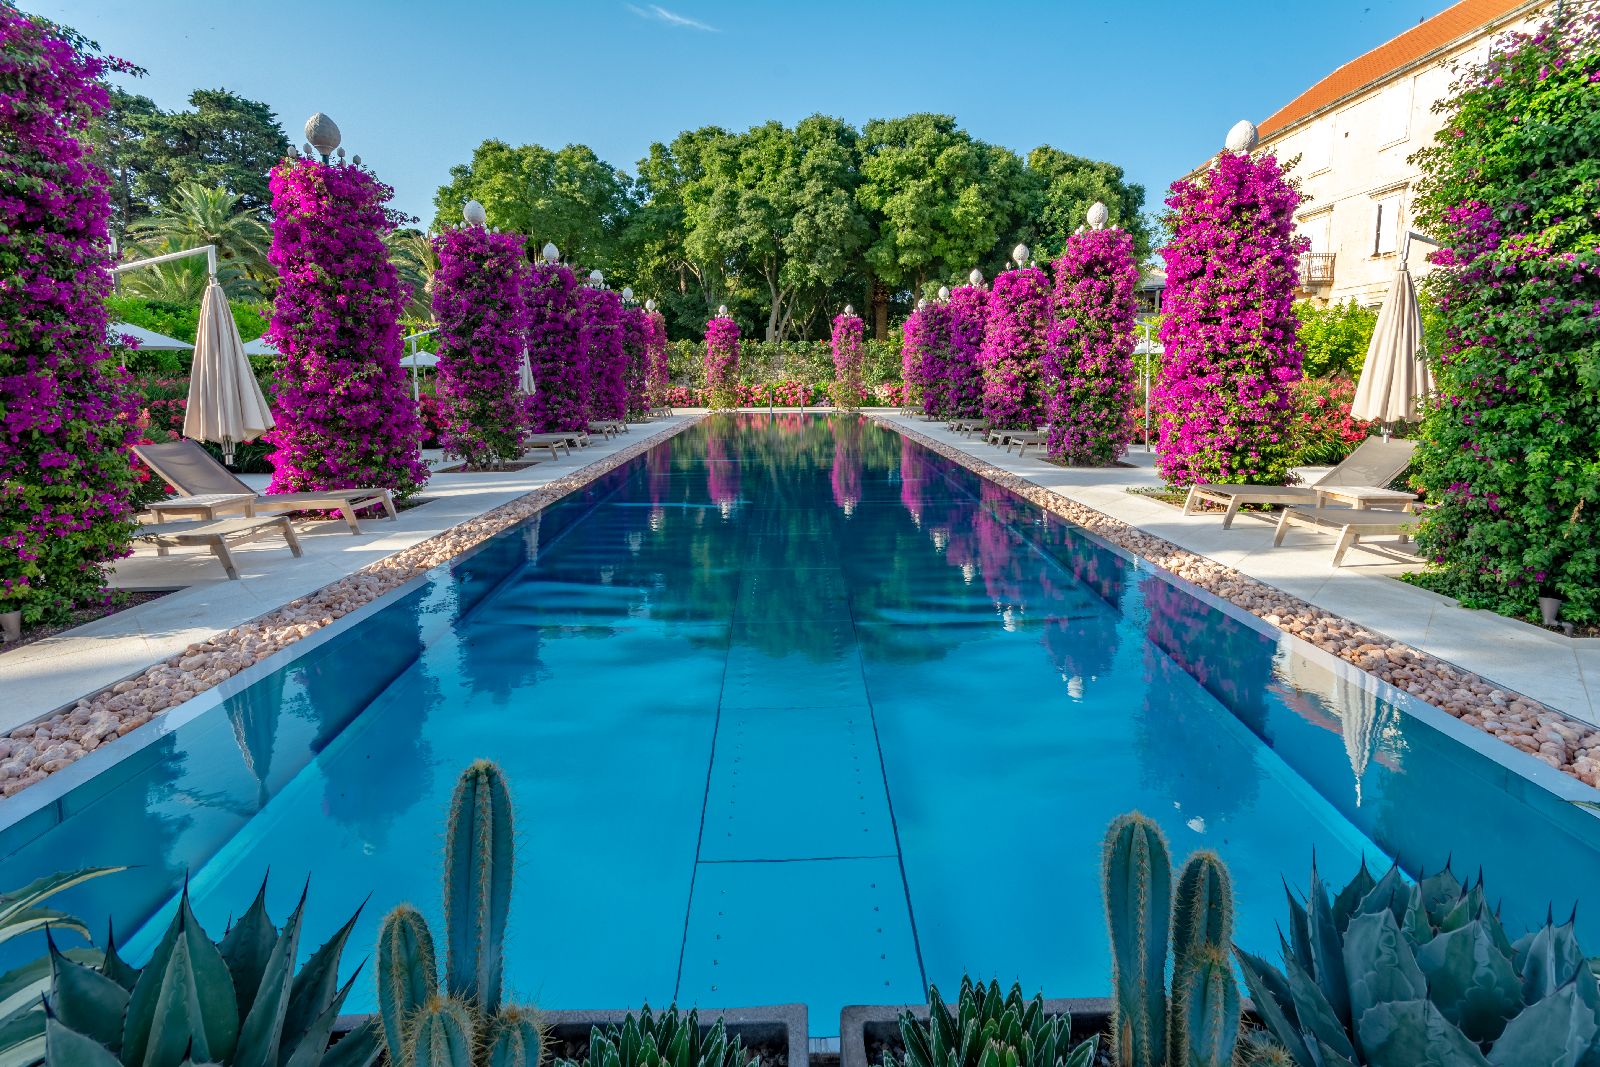 The swimming pool at Hotel Lemongarden on Brac island Croatia